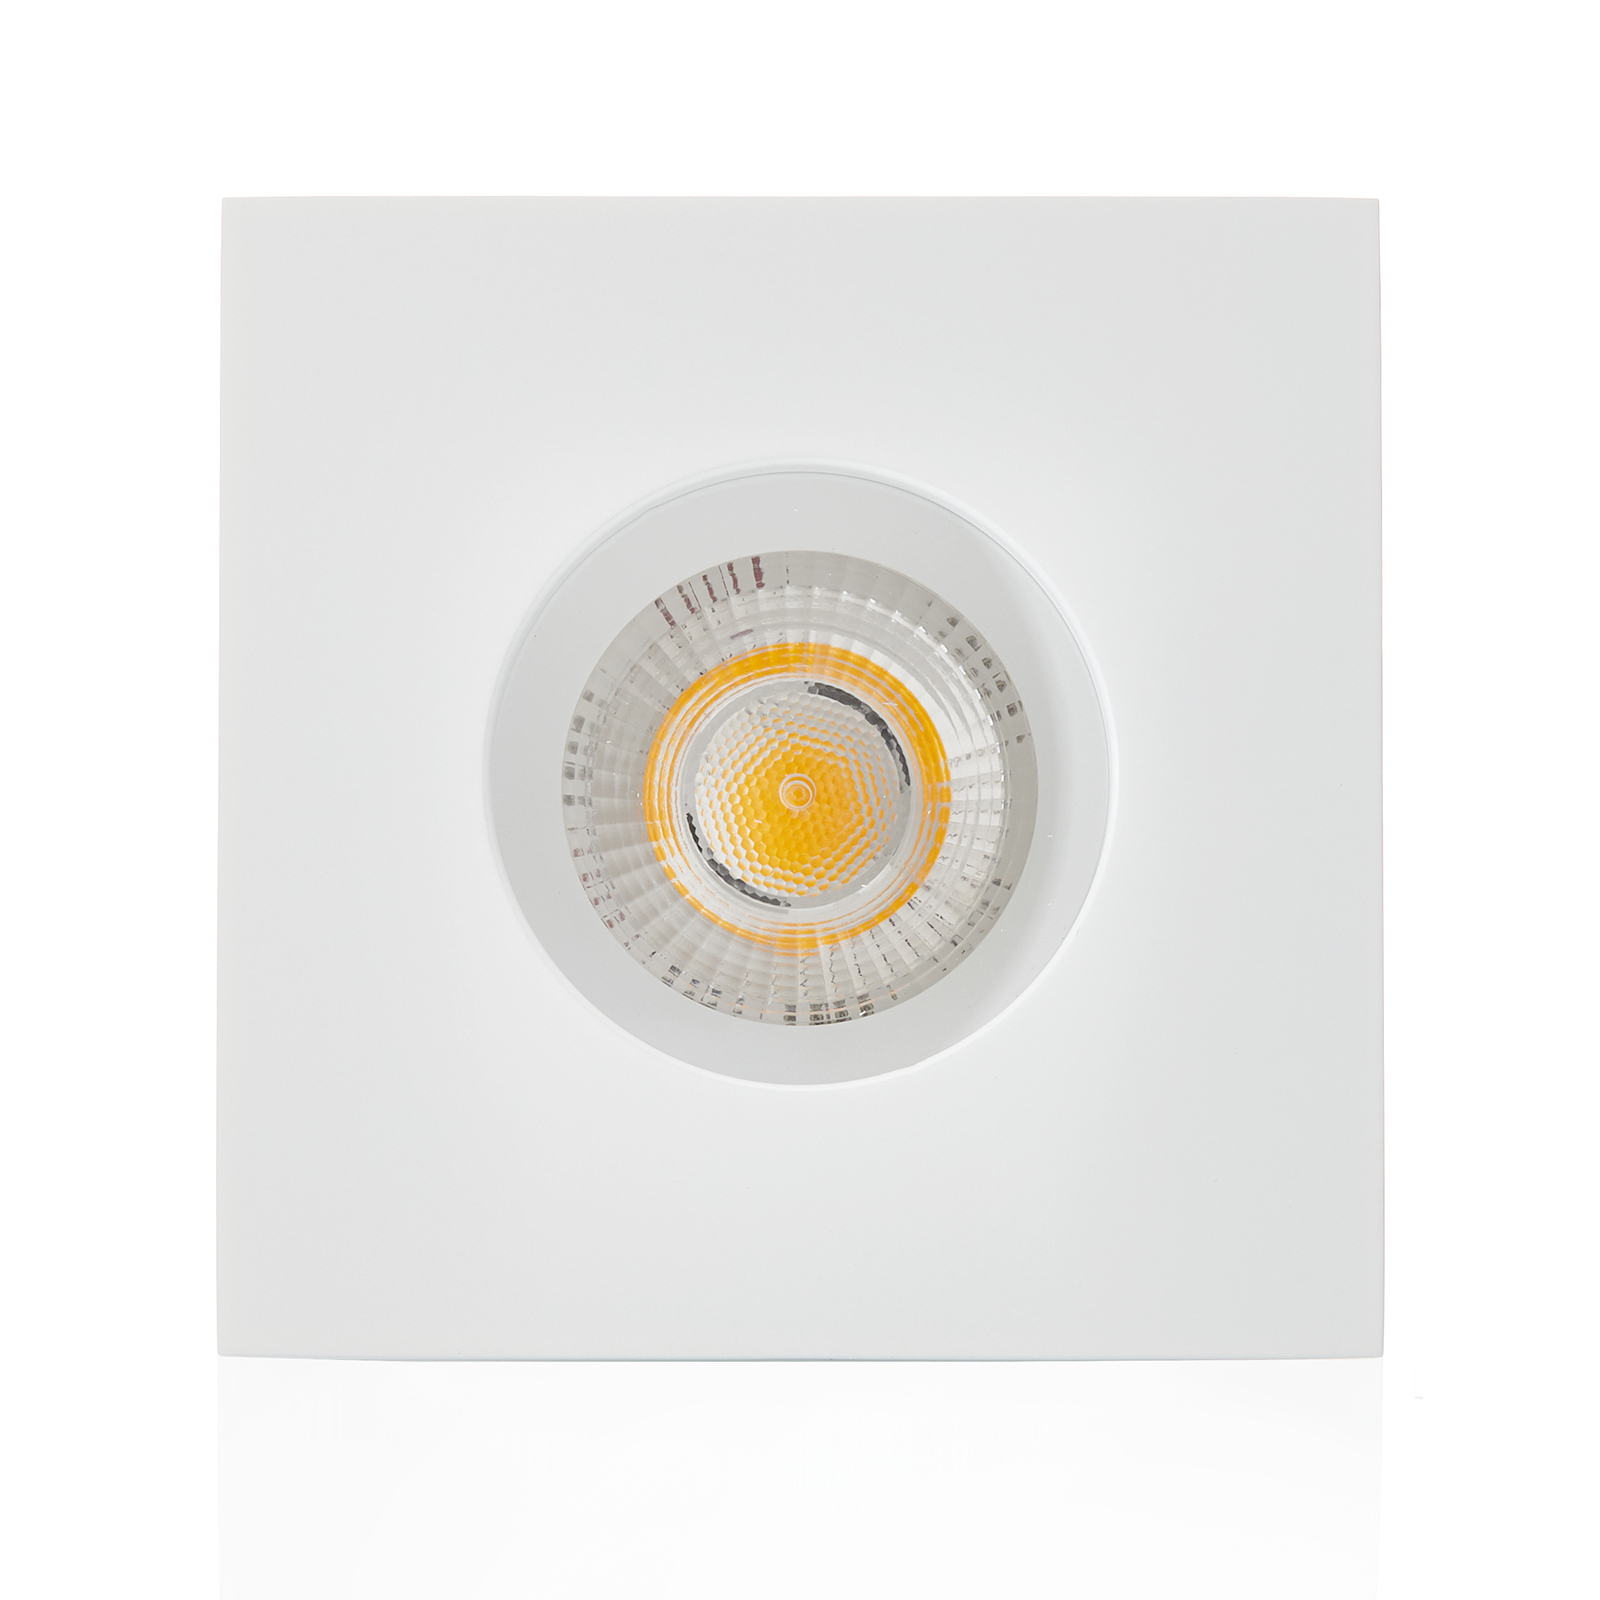 Arcchio Raku lampe angulaire, 9,3 cm, blanche